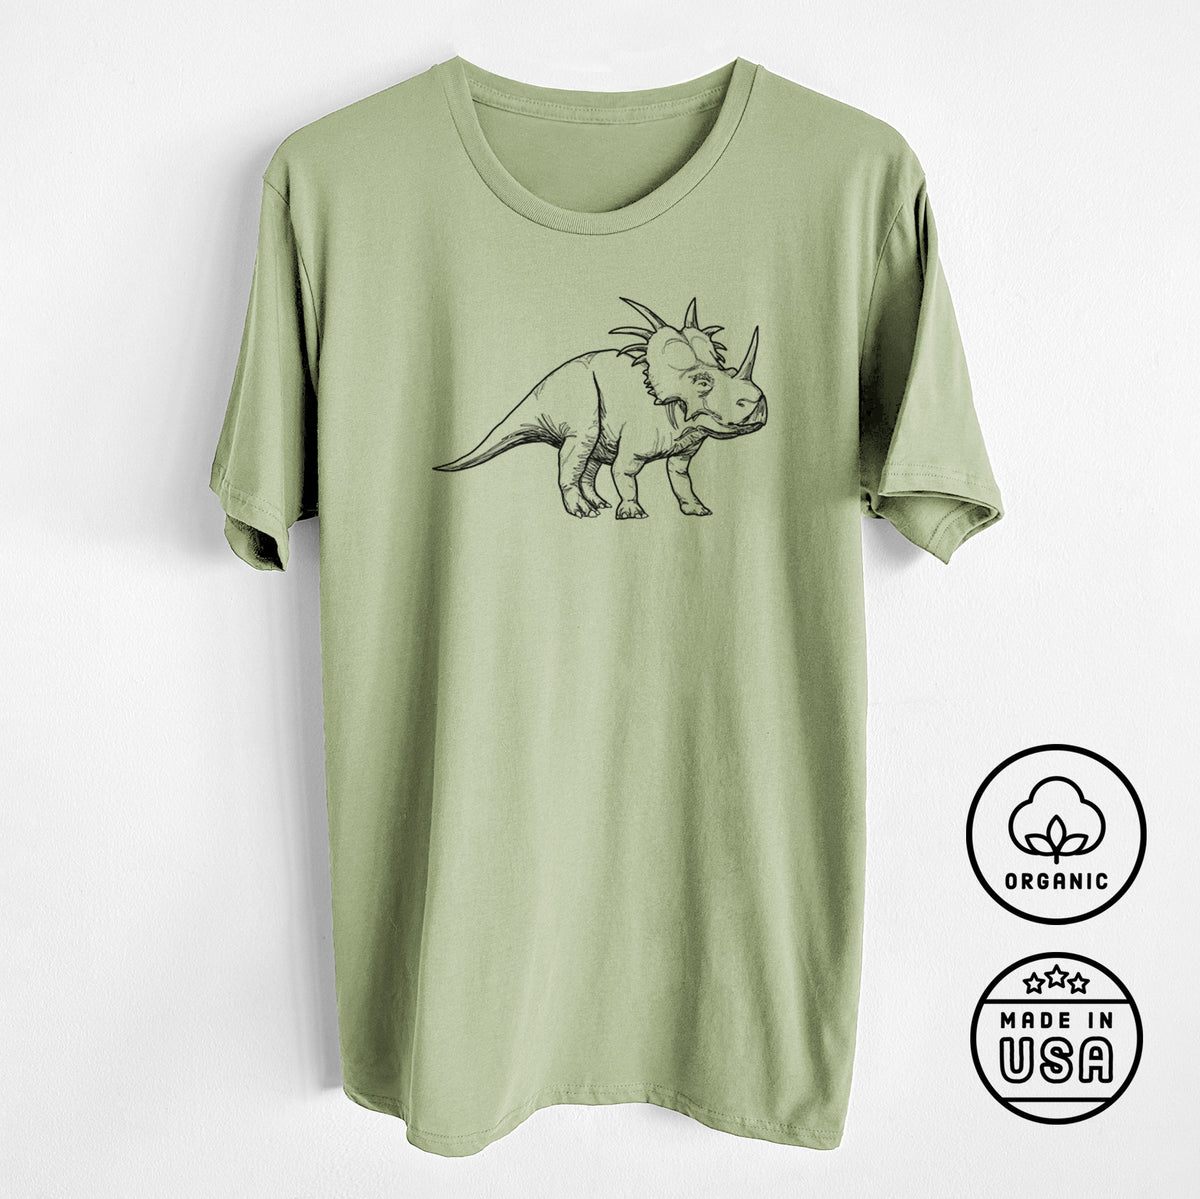 Styracosaurus Albertensis - Unisex Crewneck - Made in USA - 100% Organic Cotton